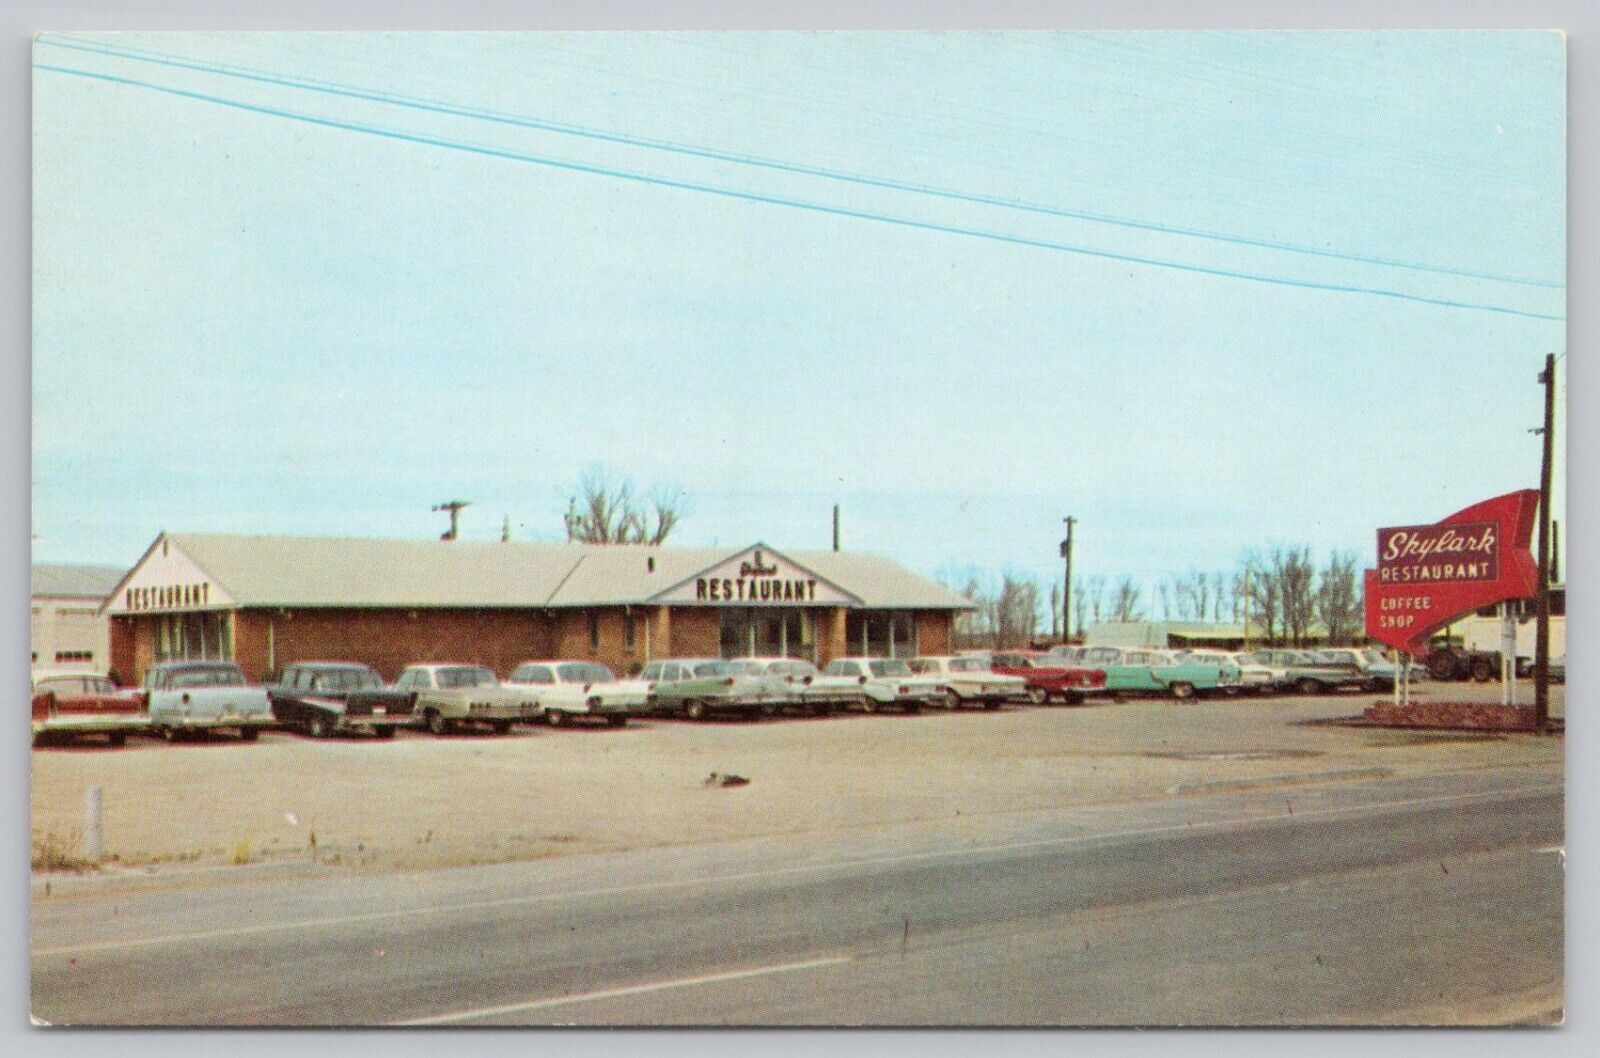 Postcard The Skylark Restaurant 1 Mile SW of Sterling Colorado